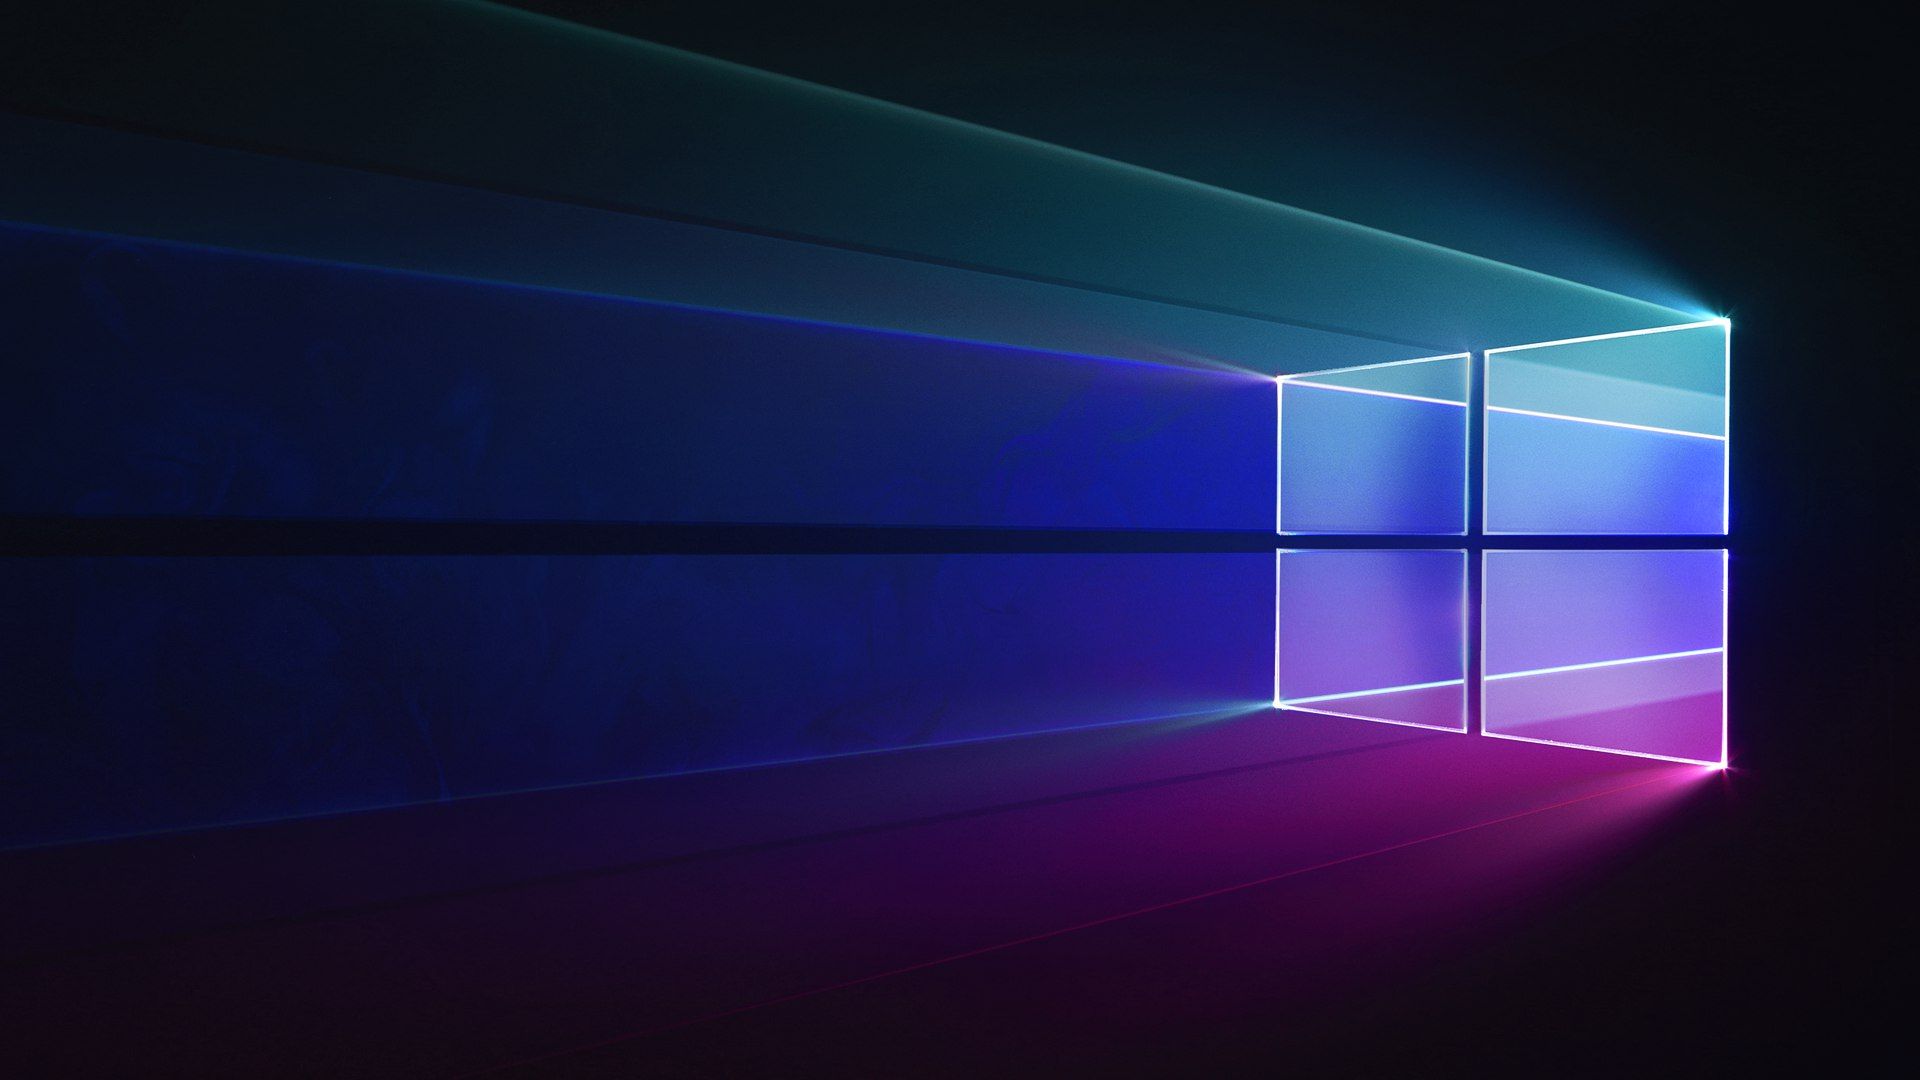 Windows 10 hd picture